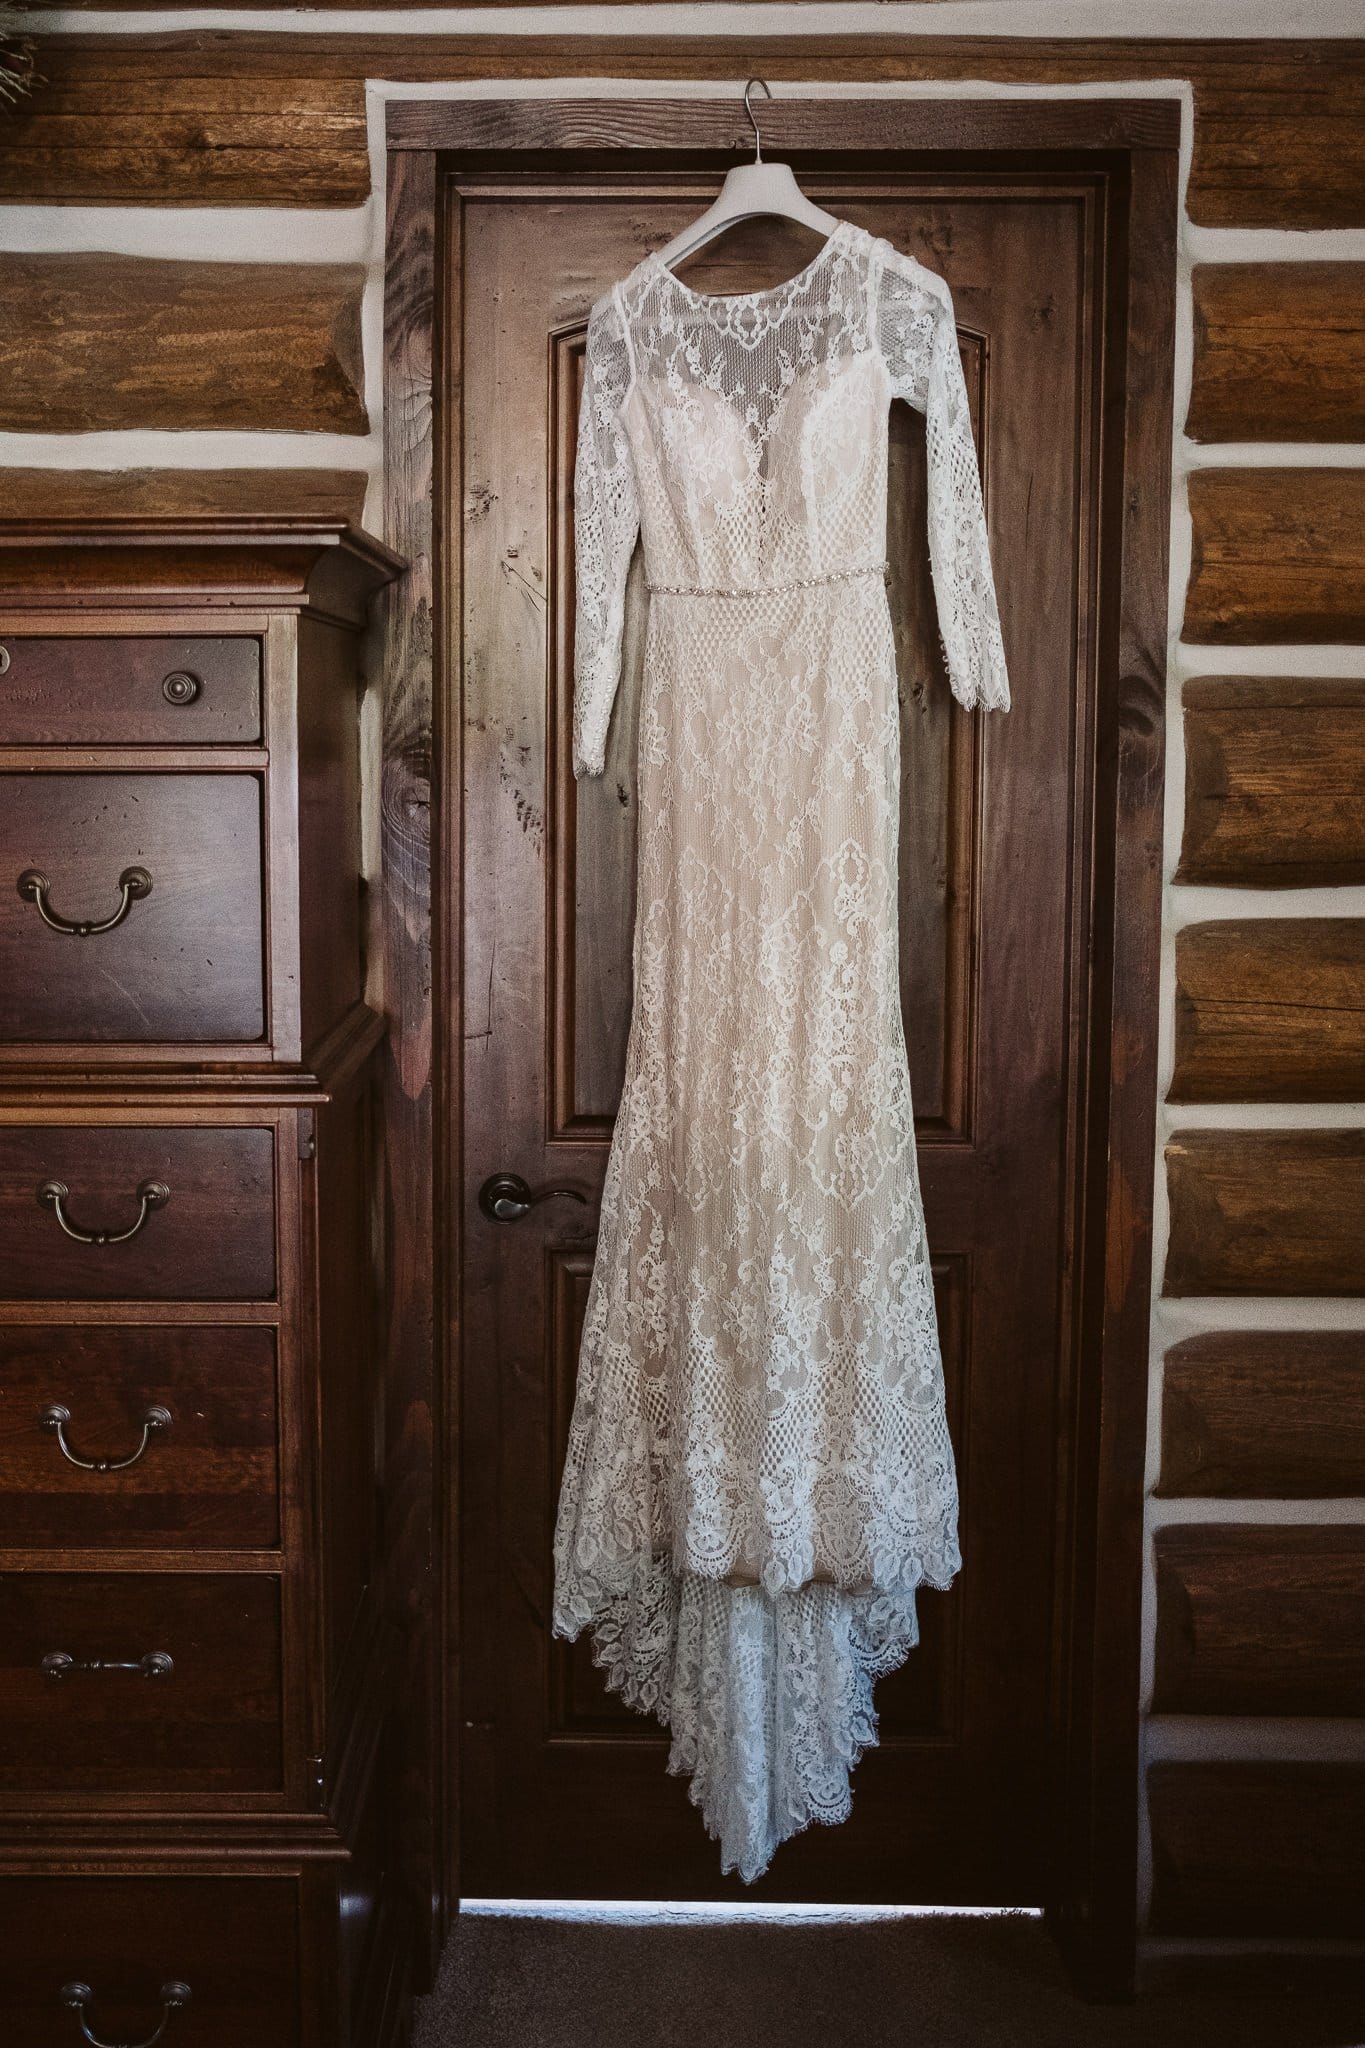 Ortiva wedding dress from White One by Pronovias, long sleeve elegant wedding dress